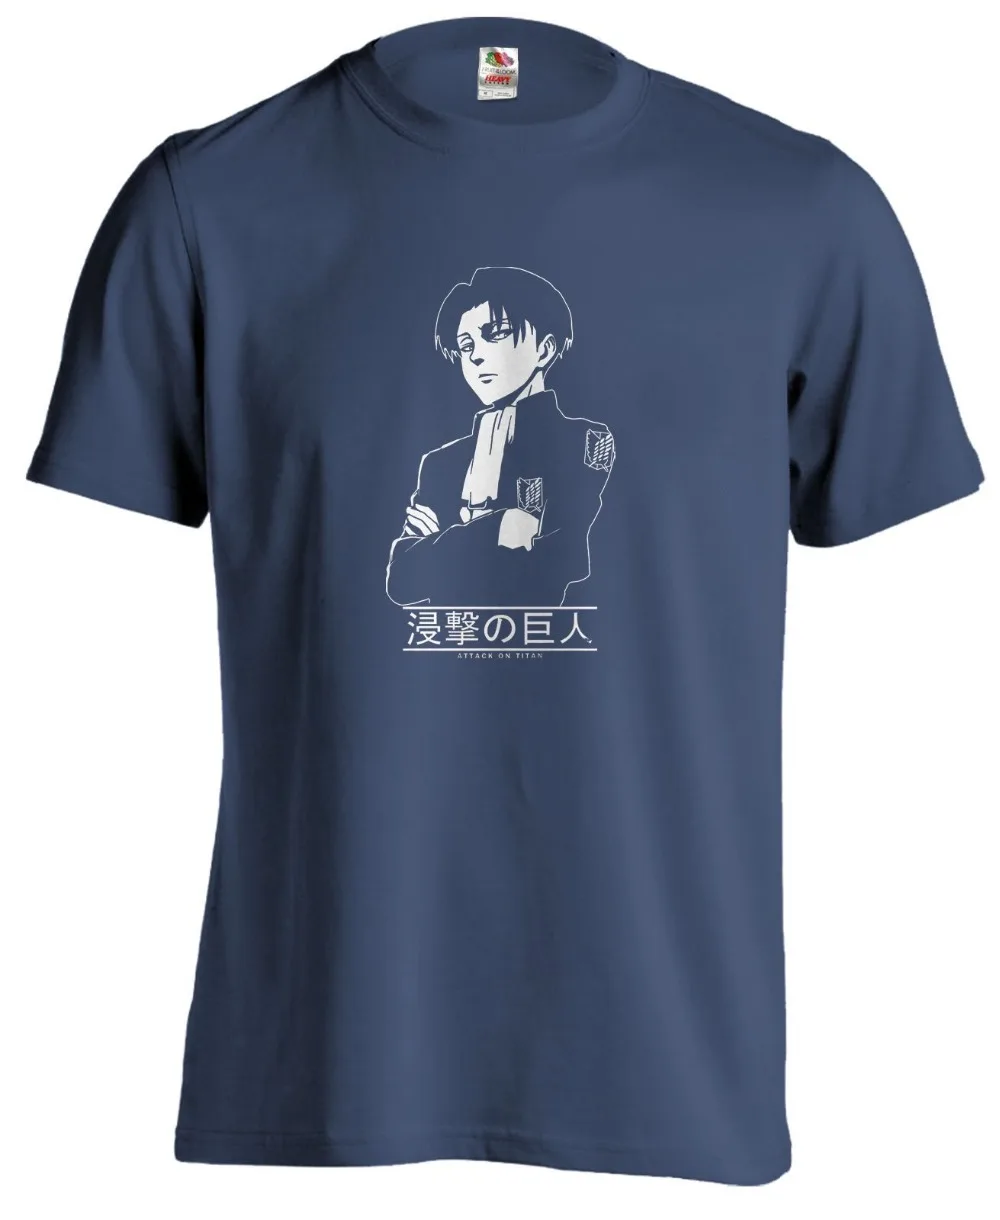 

Stranger Things Design T Shirt 2019 New Attack on Titan Shingeki no Kyojin Levi Anime Manga T shirt Tee T Shirt